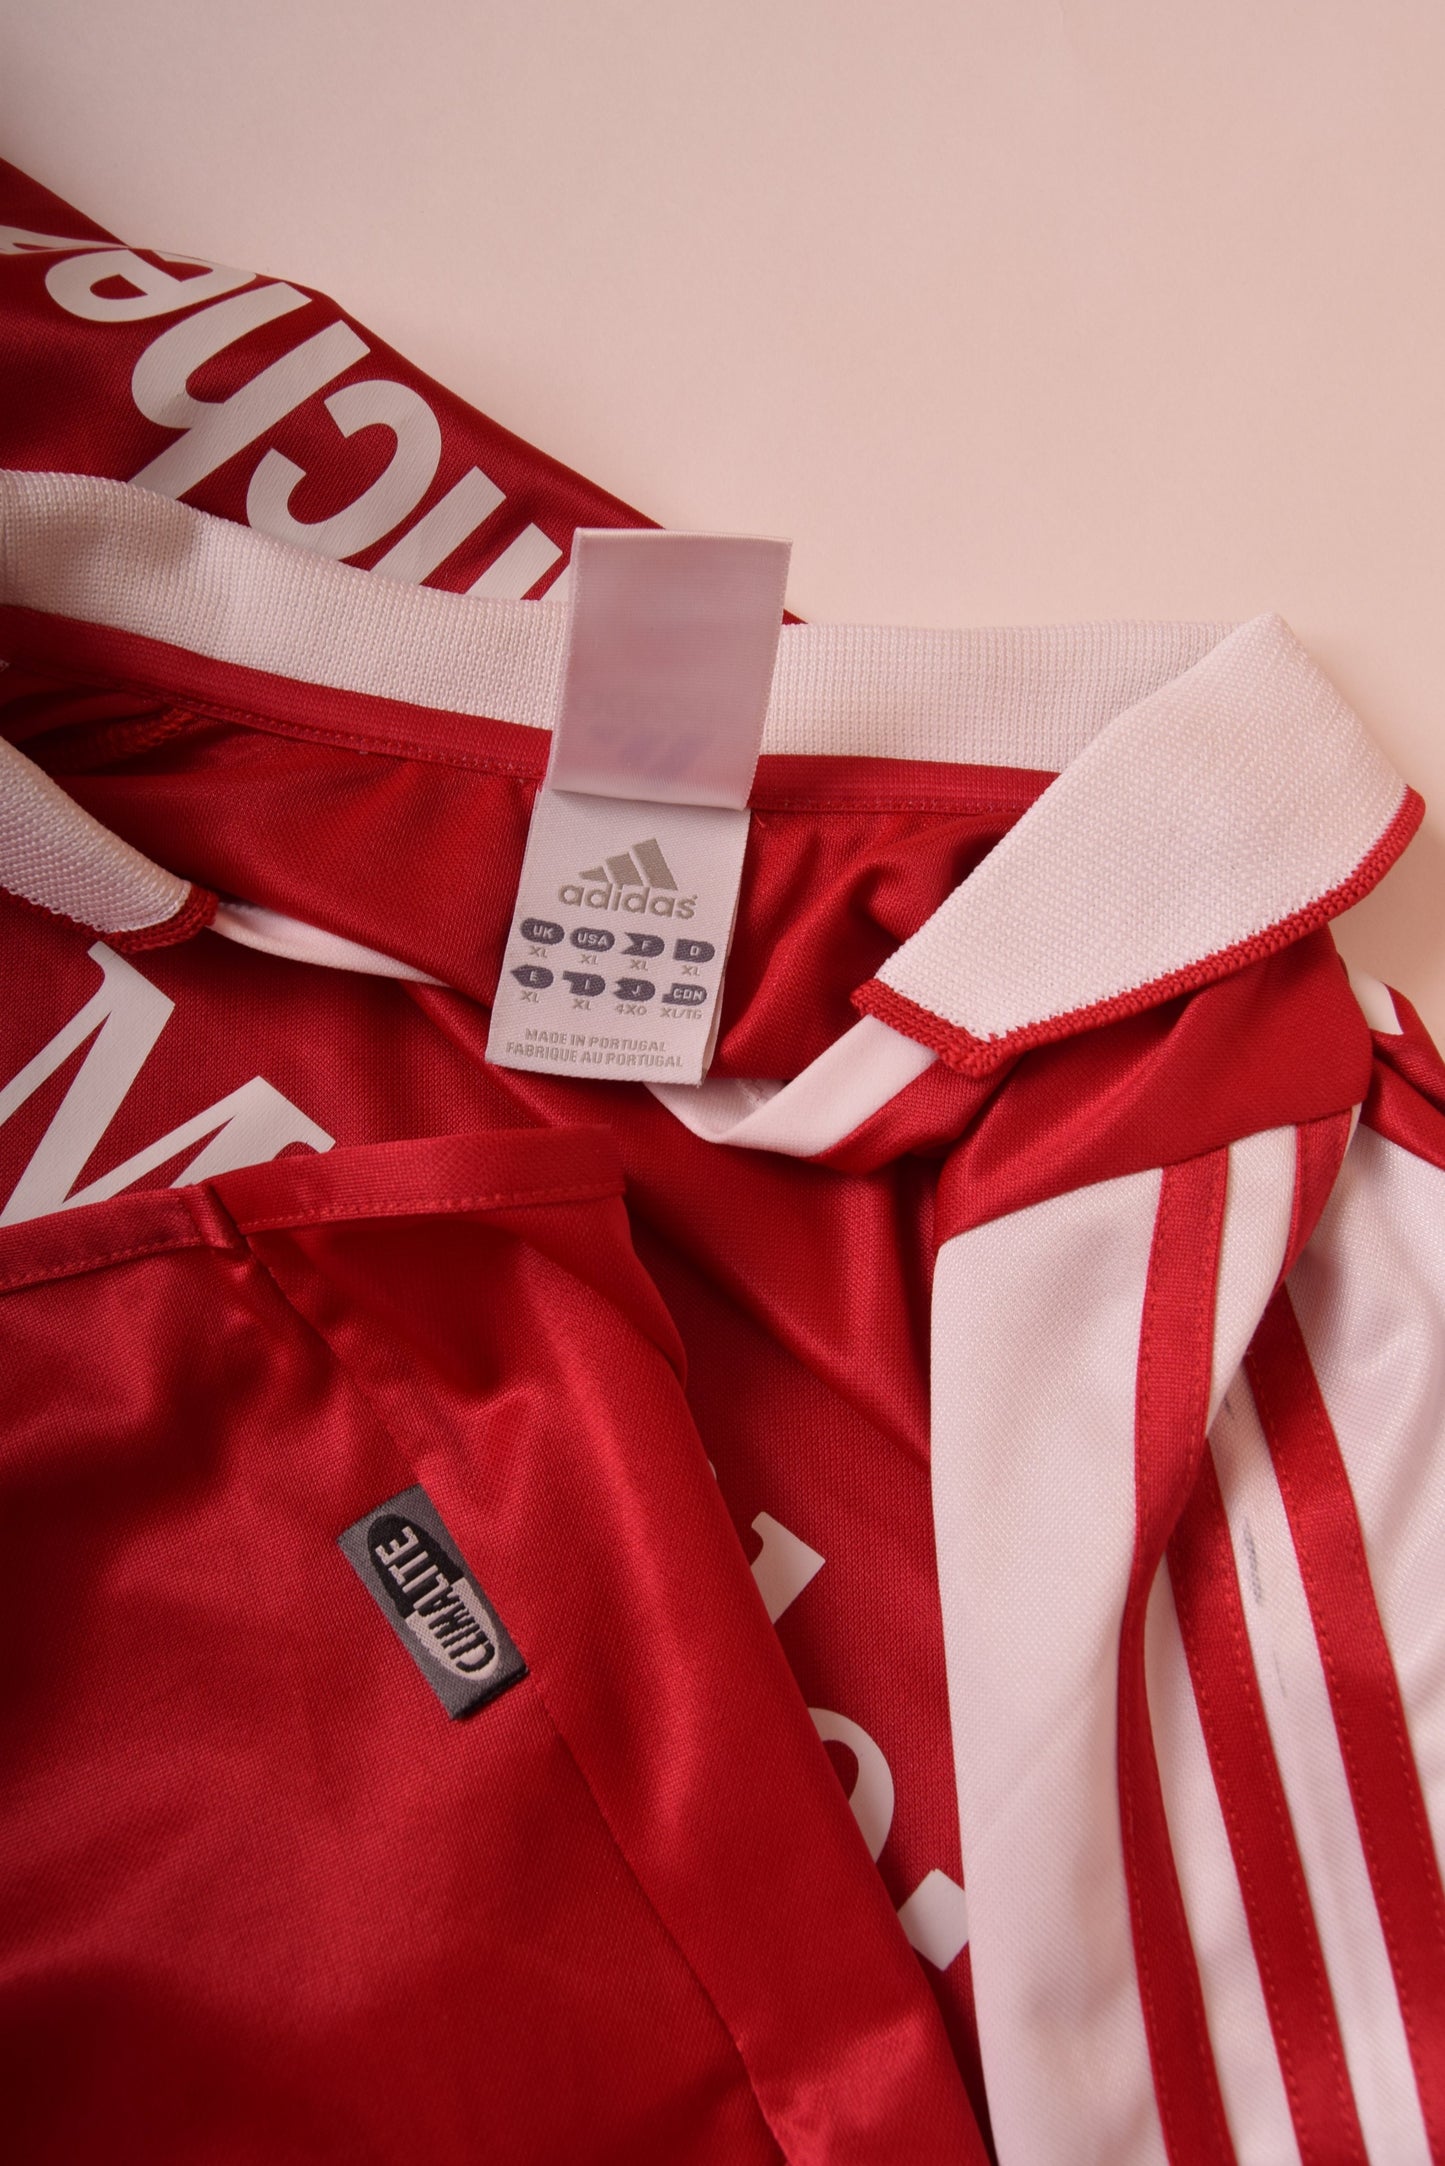 Bayern Munchen Adidas Home Football Shirt 2003 - 2004 Size XL Red White Long Sleeve